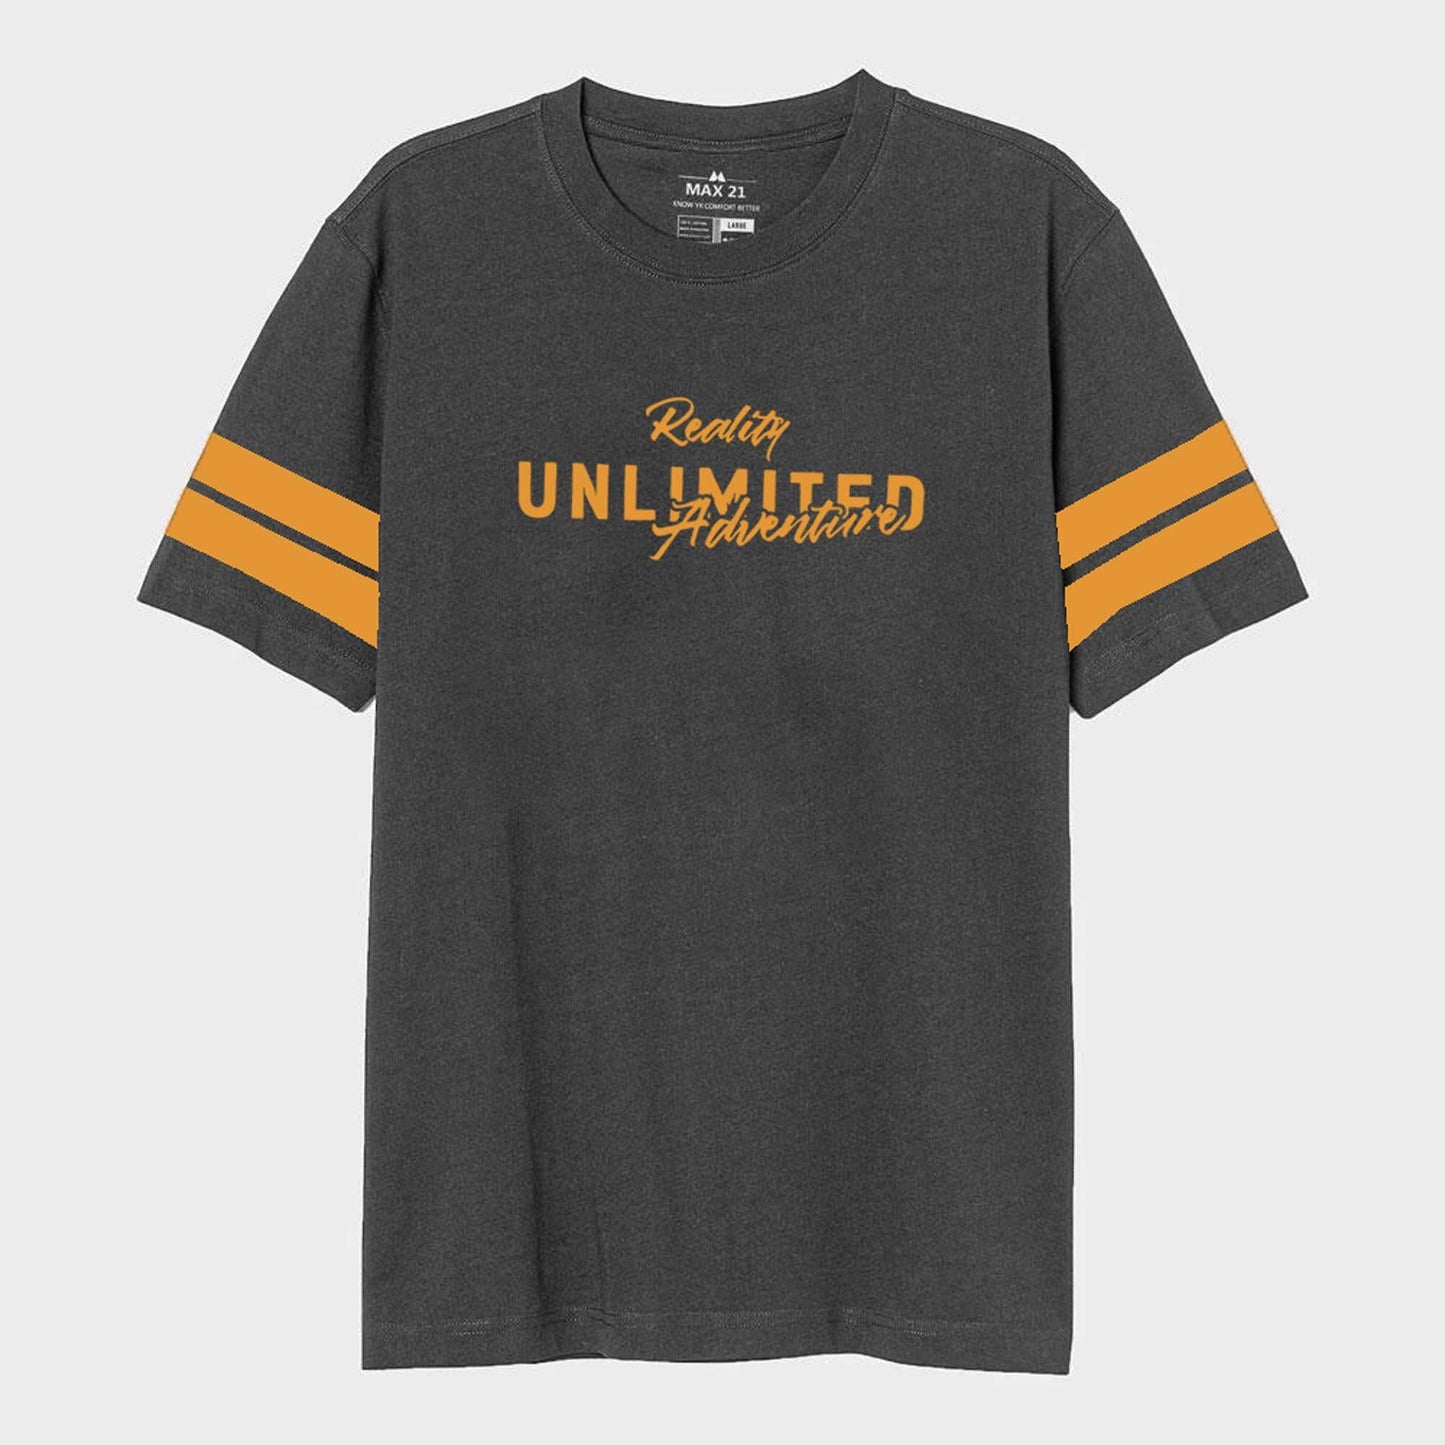 Max 21 Men's Reality Unlimited Adventure Printed Short Sleeve Tee Shirt Men's Tee Shirt SZK Charcoal S 